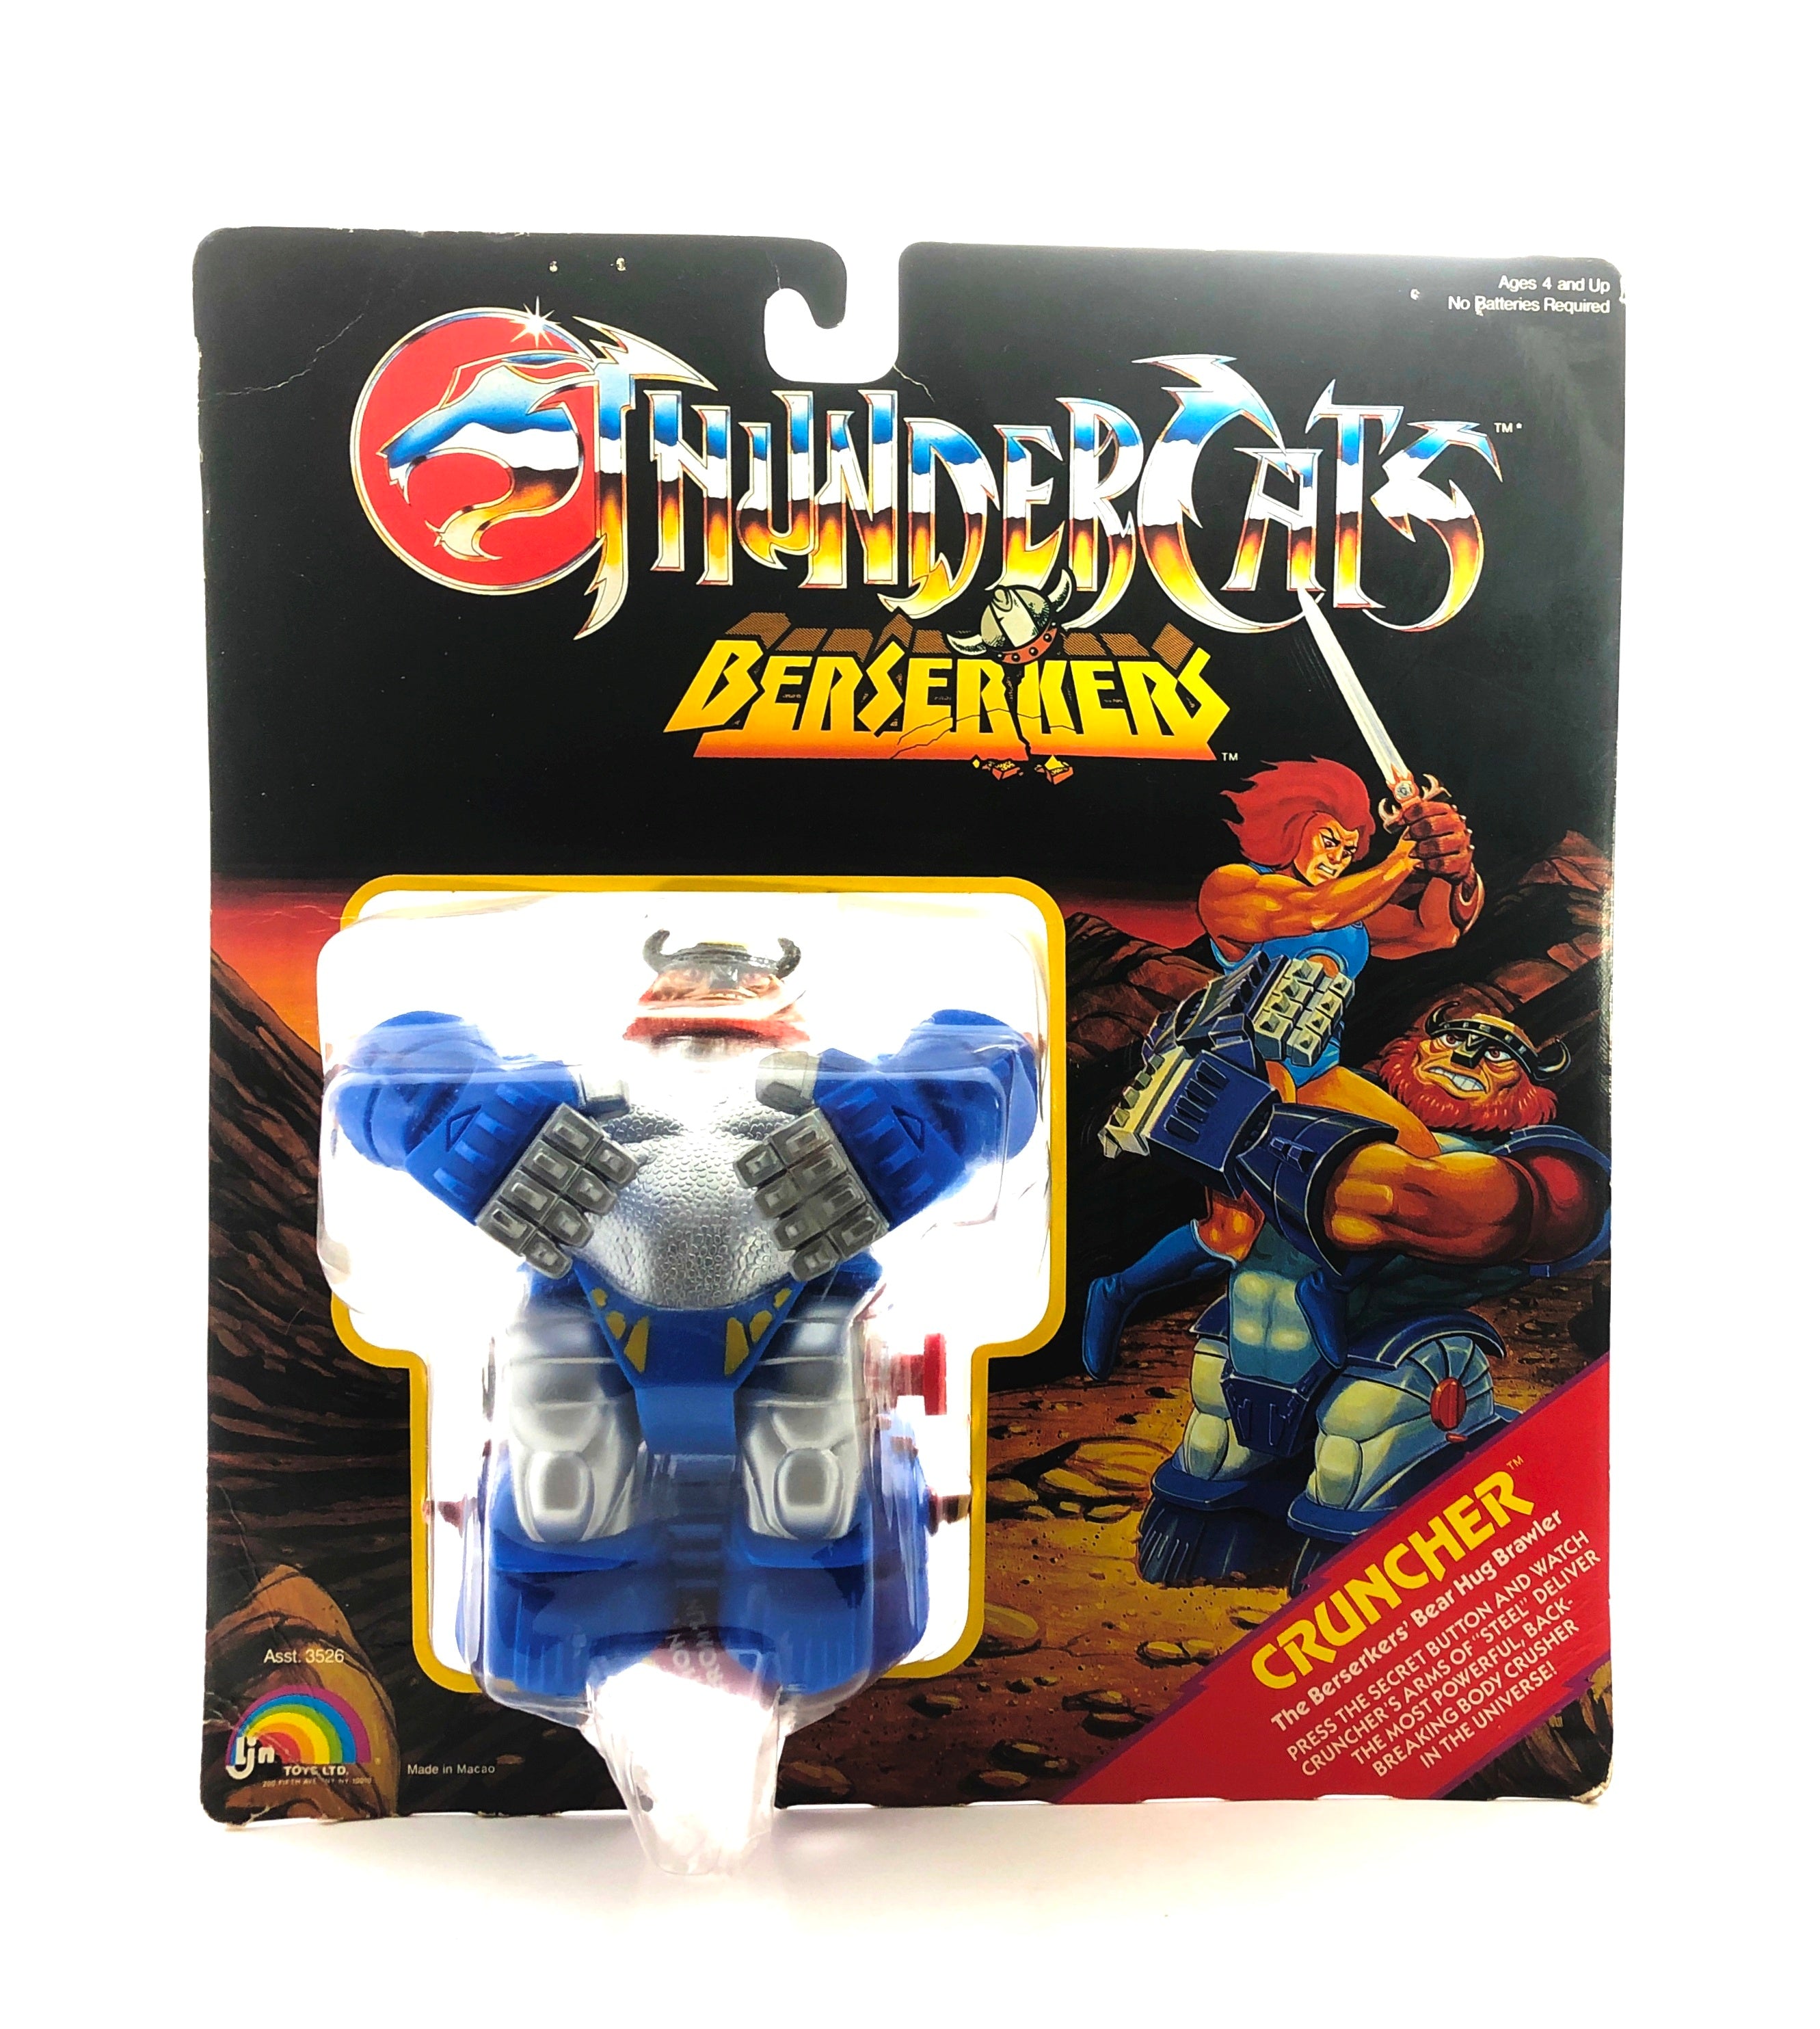 Thundercats: Berserkers Cruncher (LJN, 1986) - 0